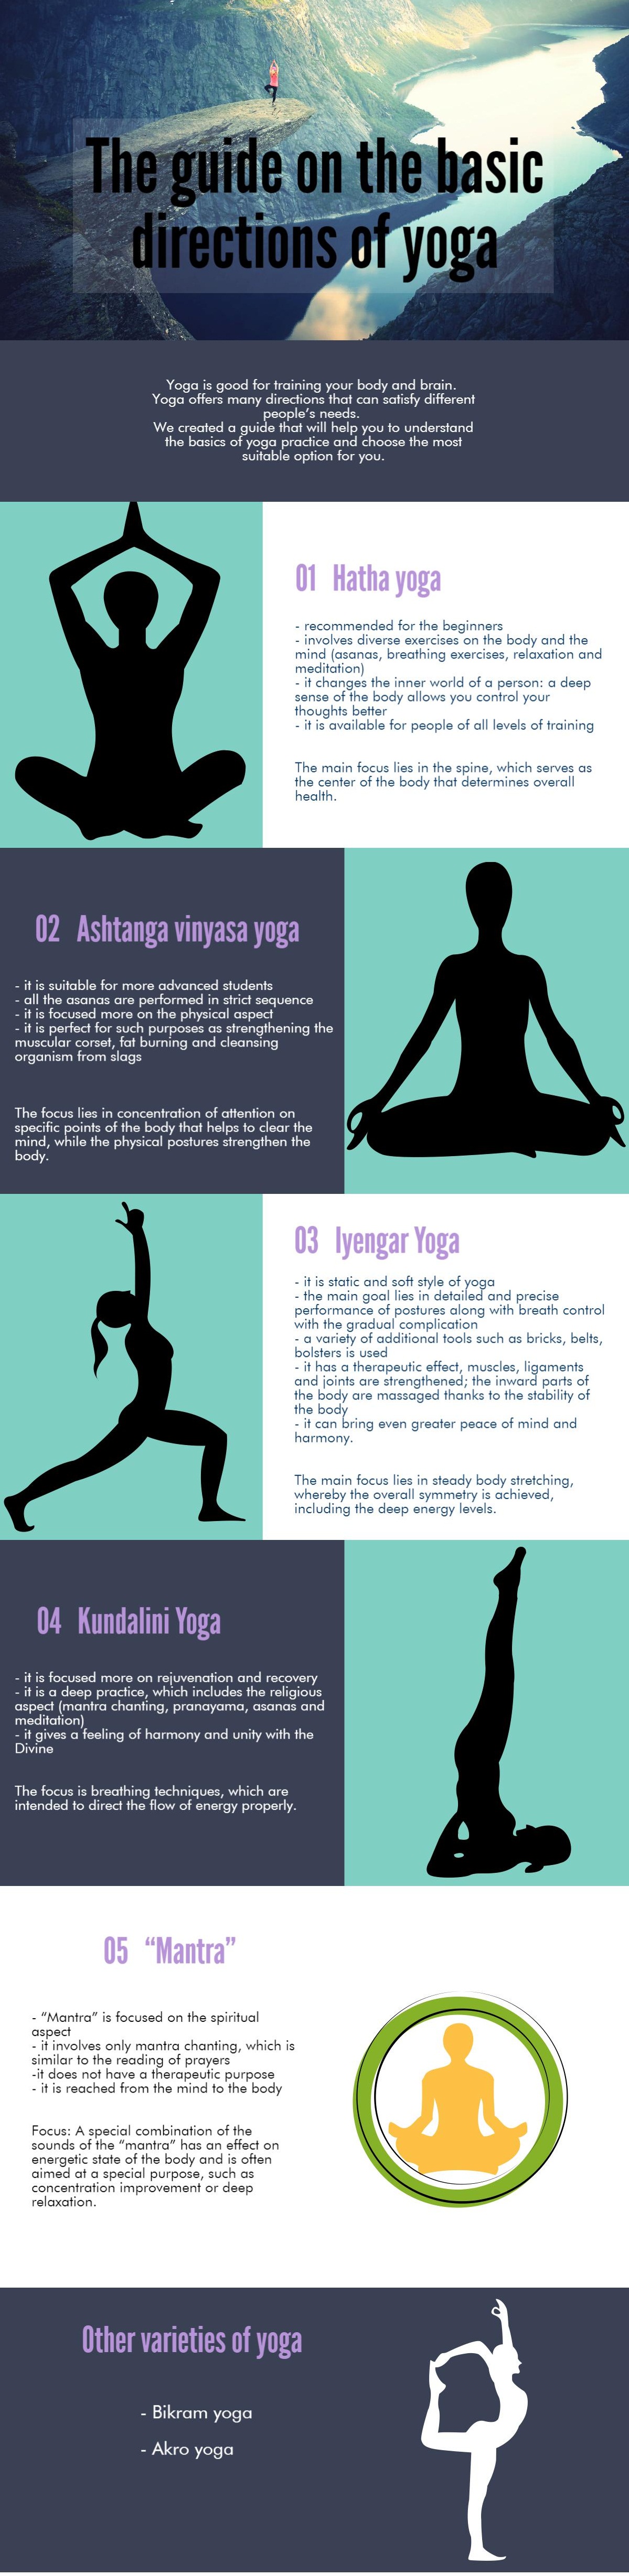 Hatha Yoga: Learn About This Fundamental Format